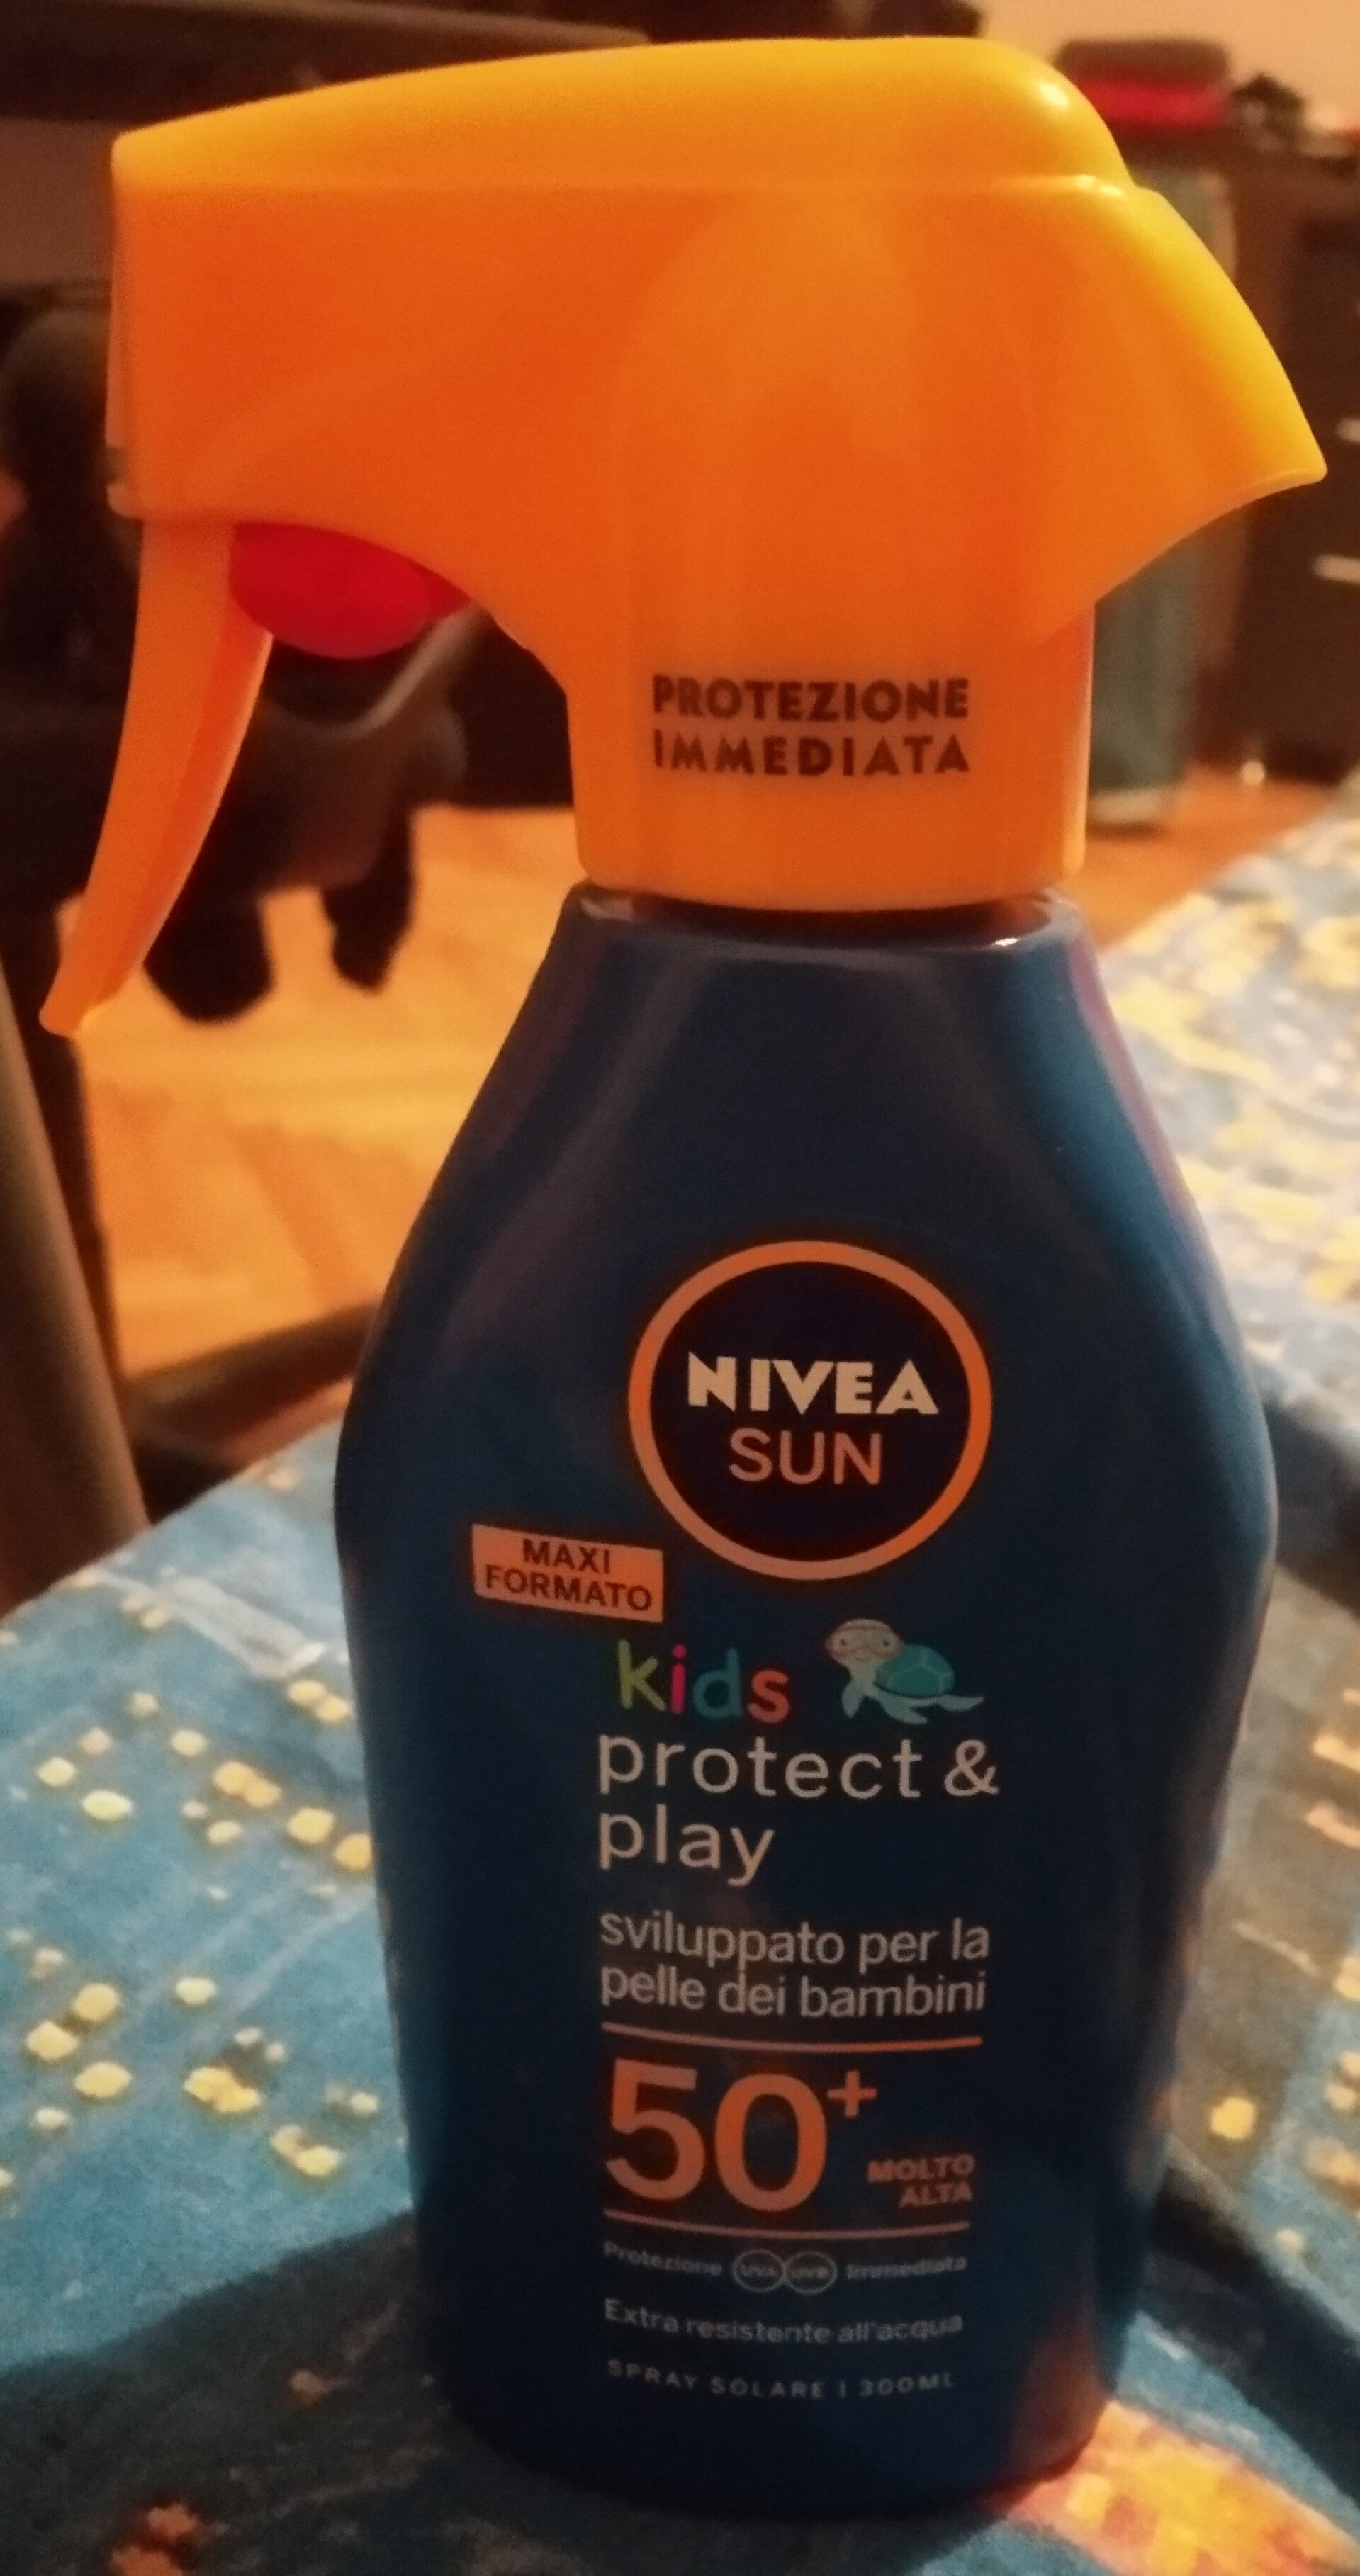 Nivea sun kids protect & play 50+ - 製品 - it